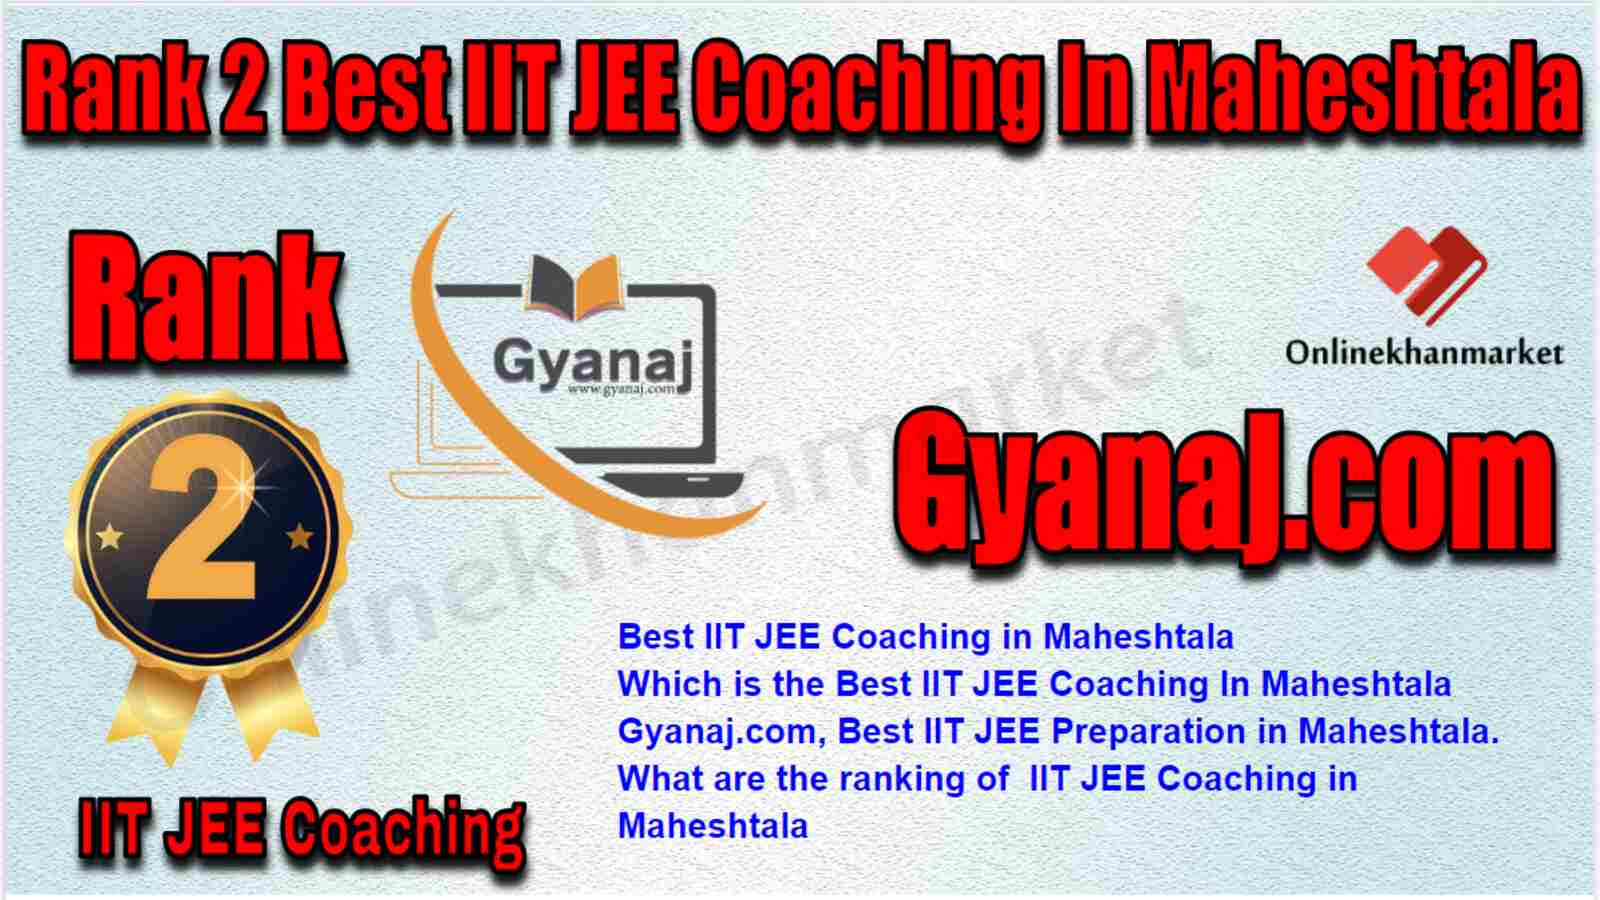 Rank 2 Best IIT JEE Coaching in Maheshtala